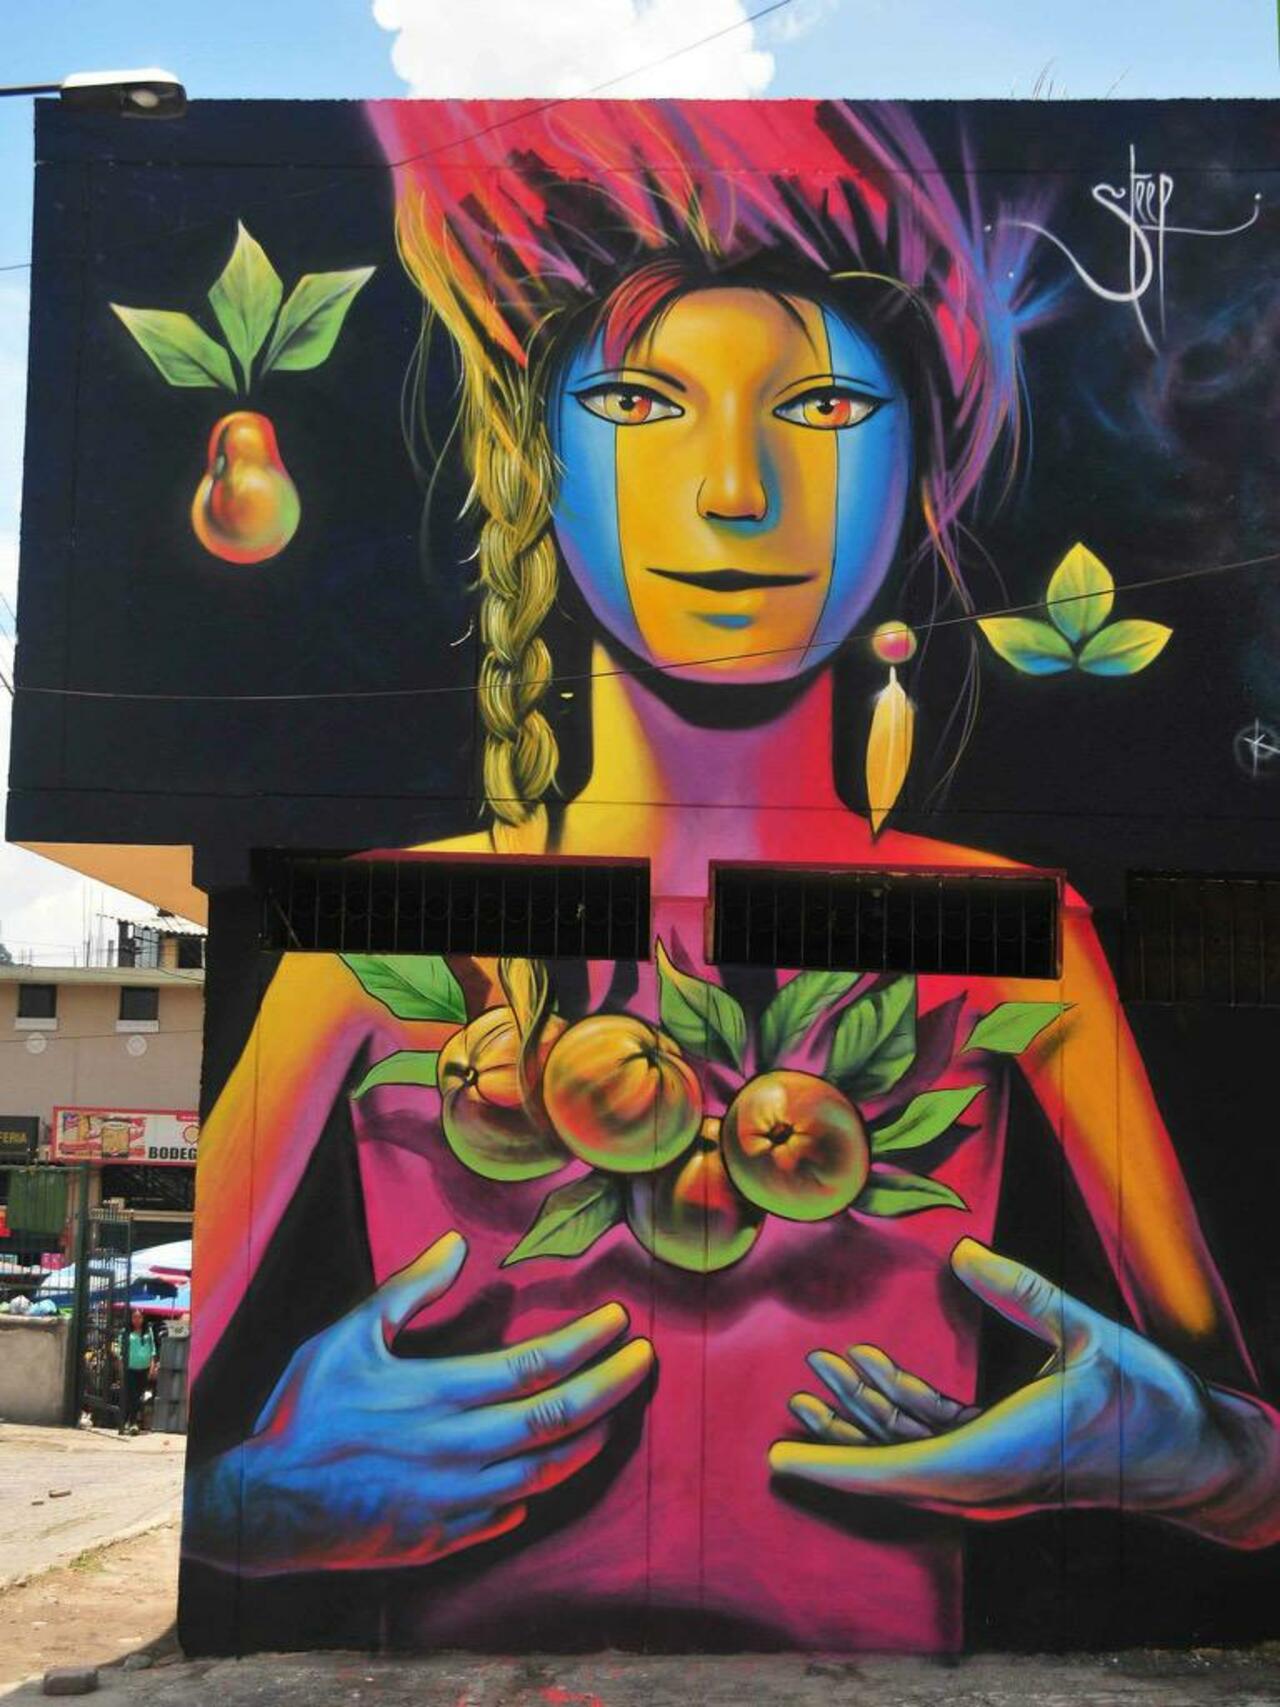 RT belilac "Street Art by Steep

#art #graffiti #mural #streetart http://t.co/geLfOtbr4c"